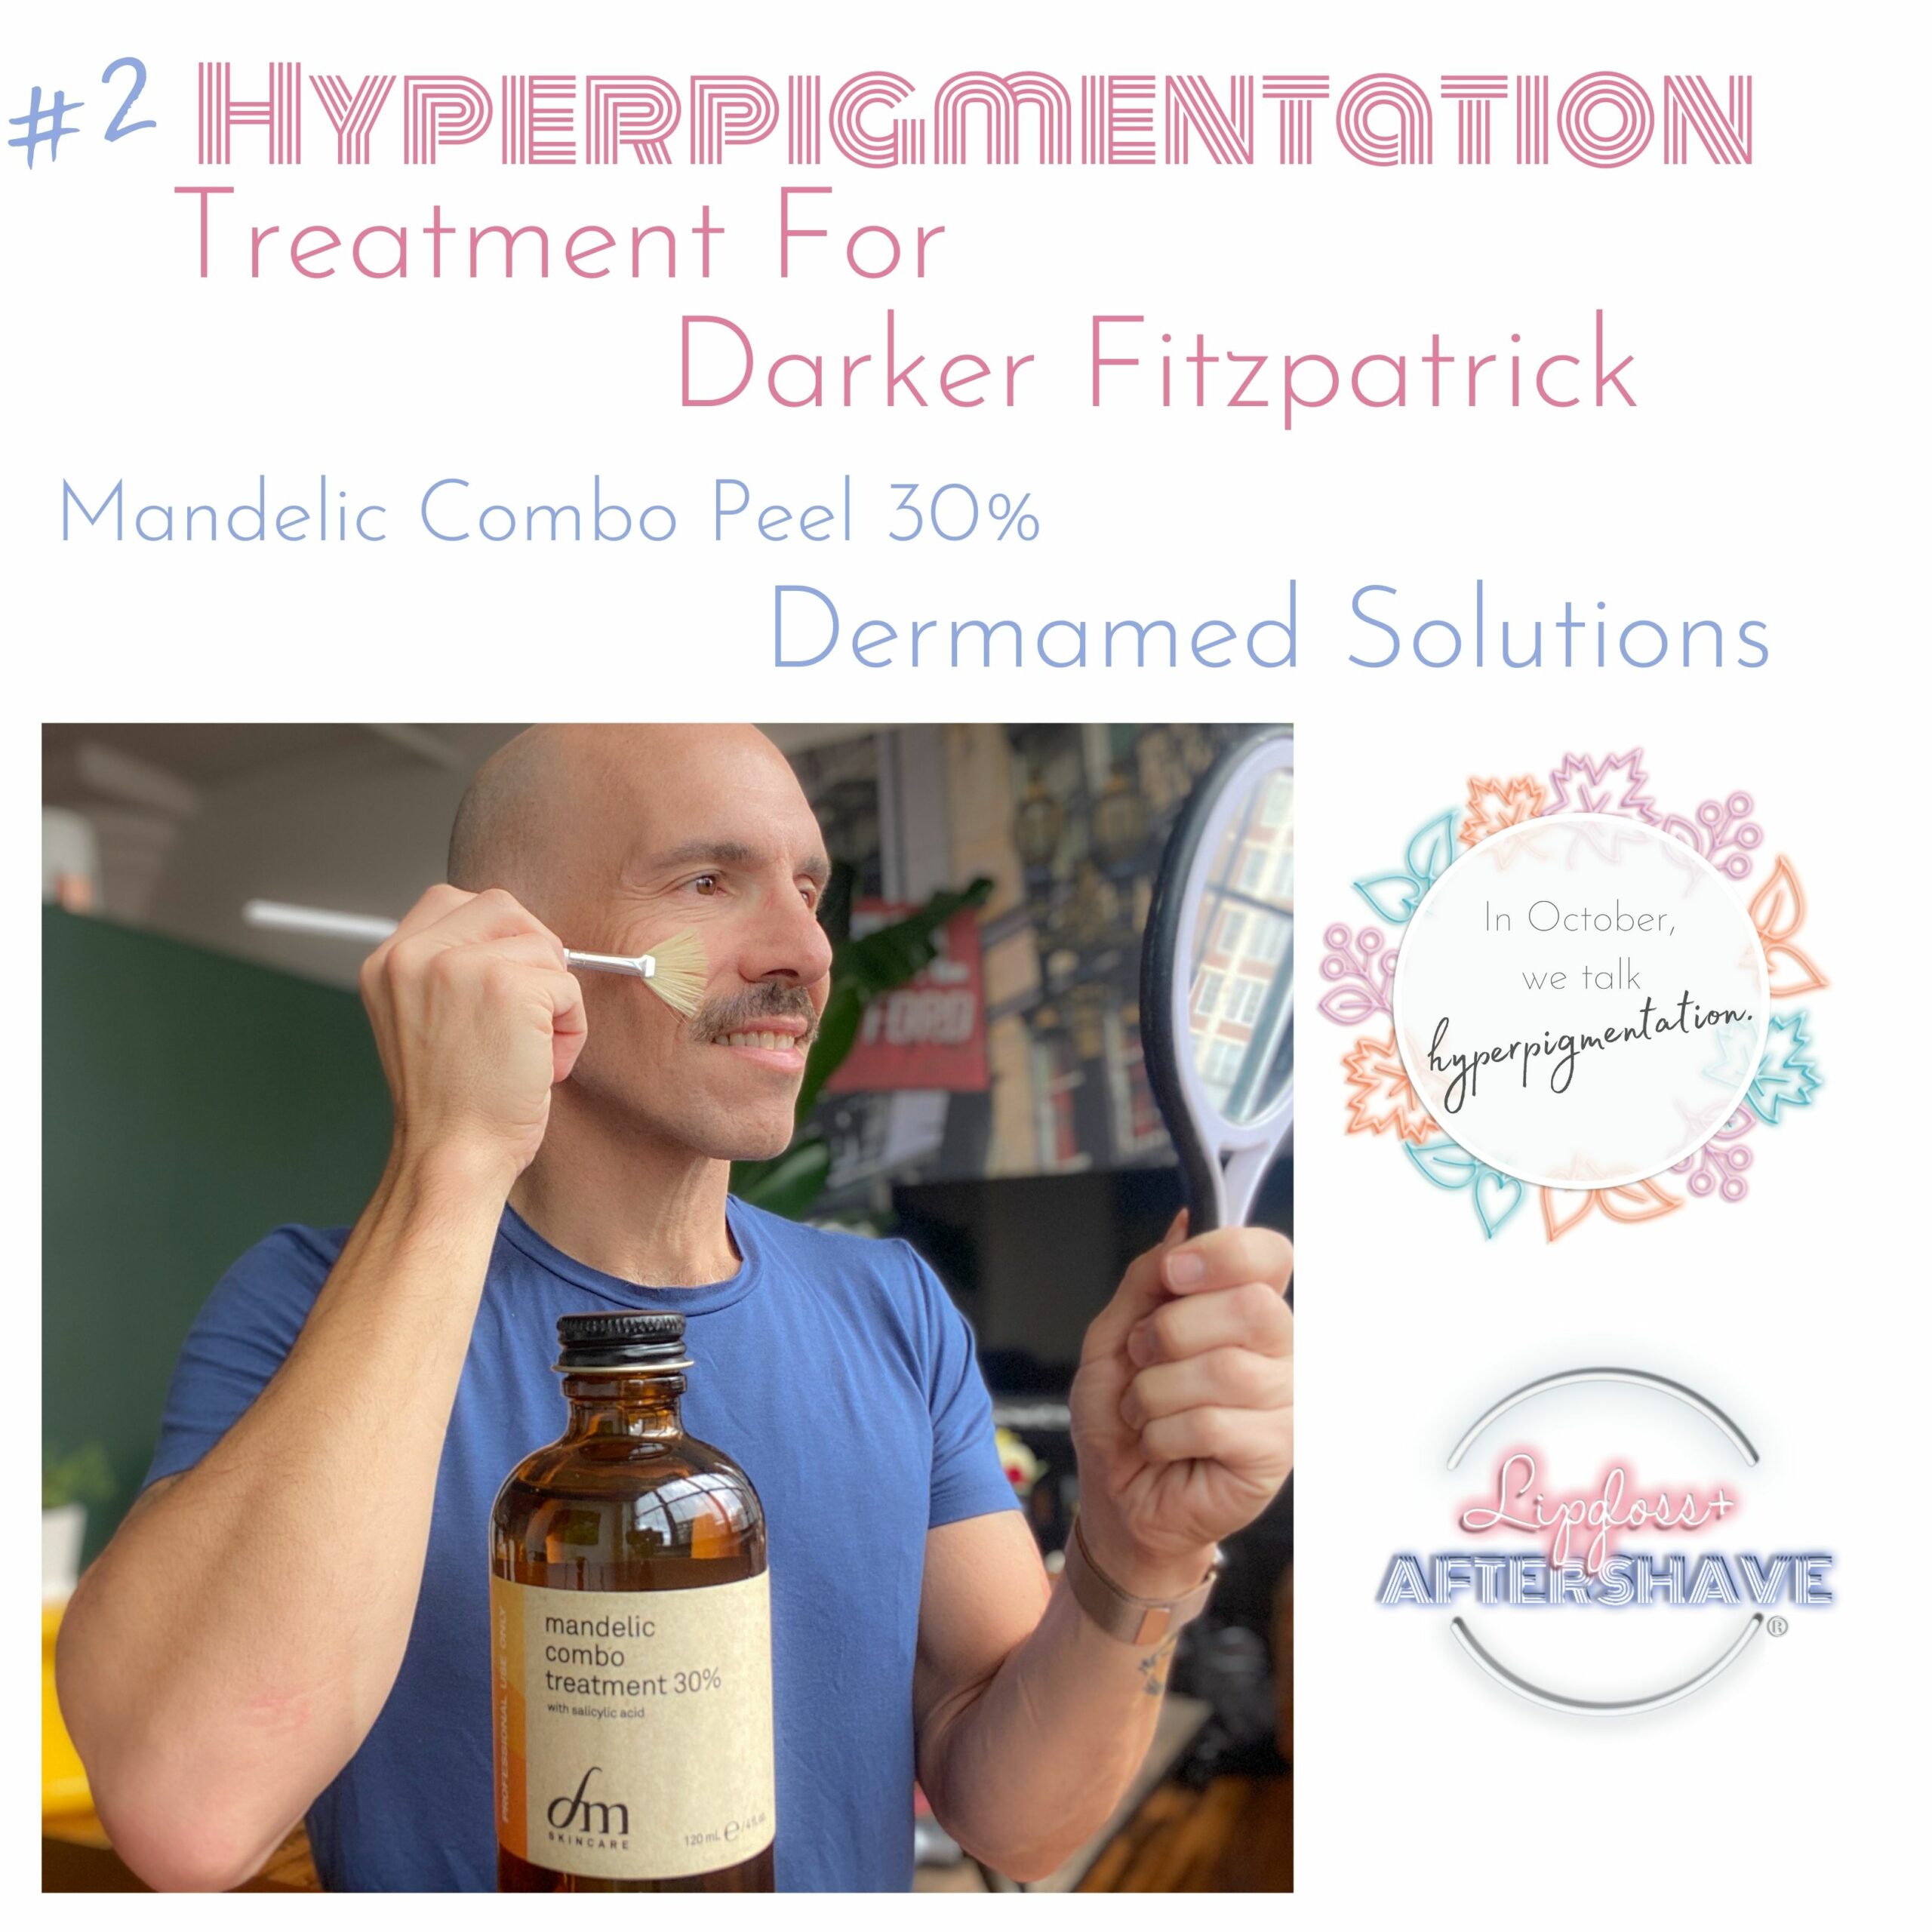 Hyperpigmentation Treatments For Darker Fitzpatrick